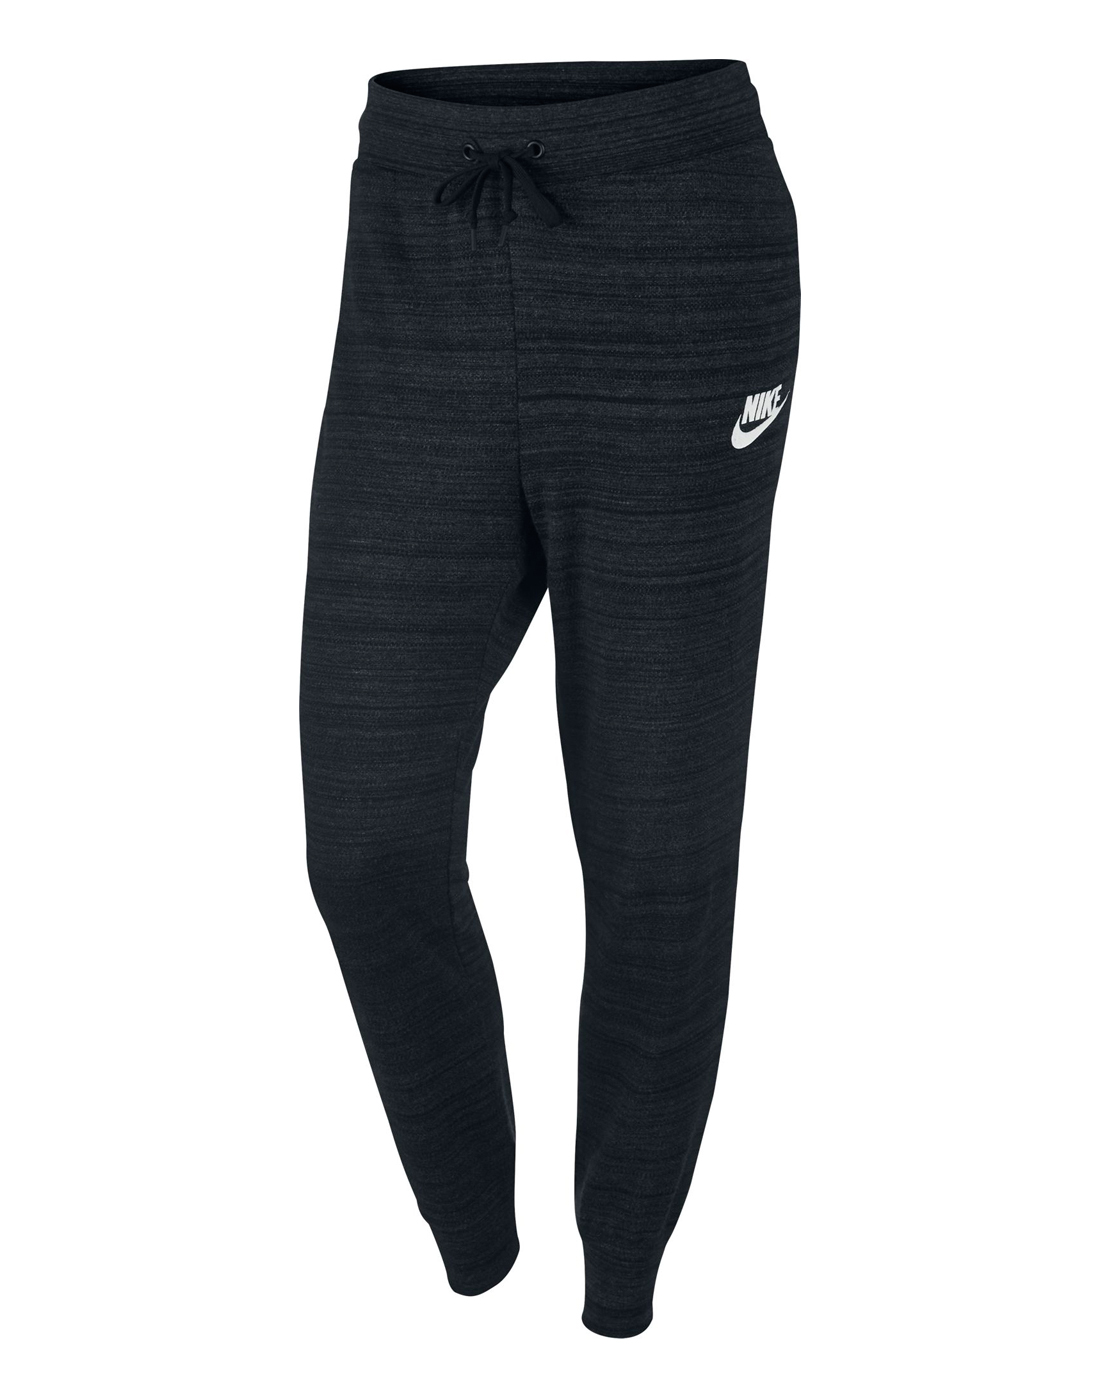 Nike Womens Advance Fleece Pant - Black | Life Style Sports UK